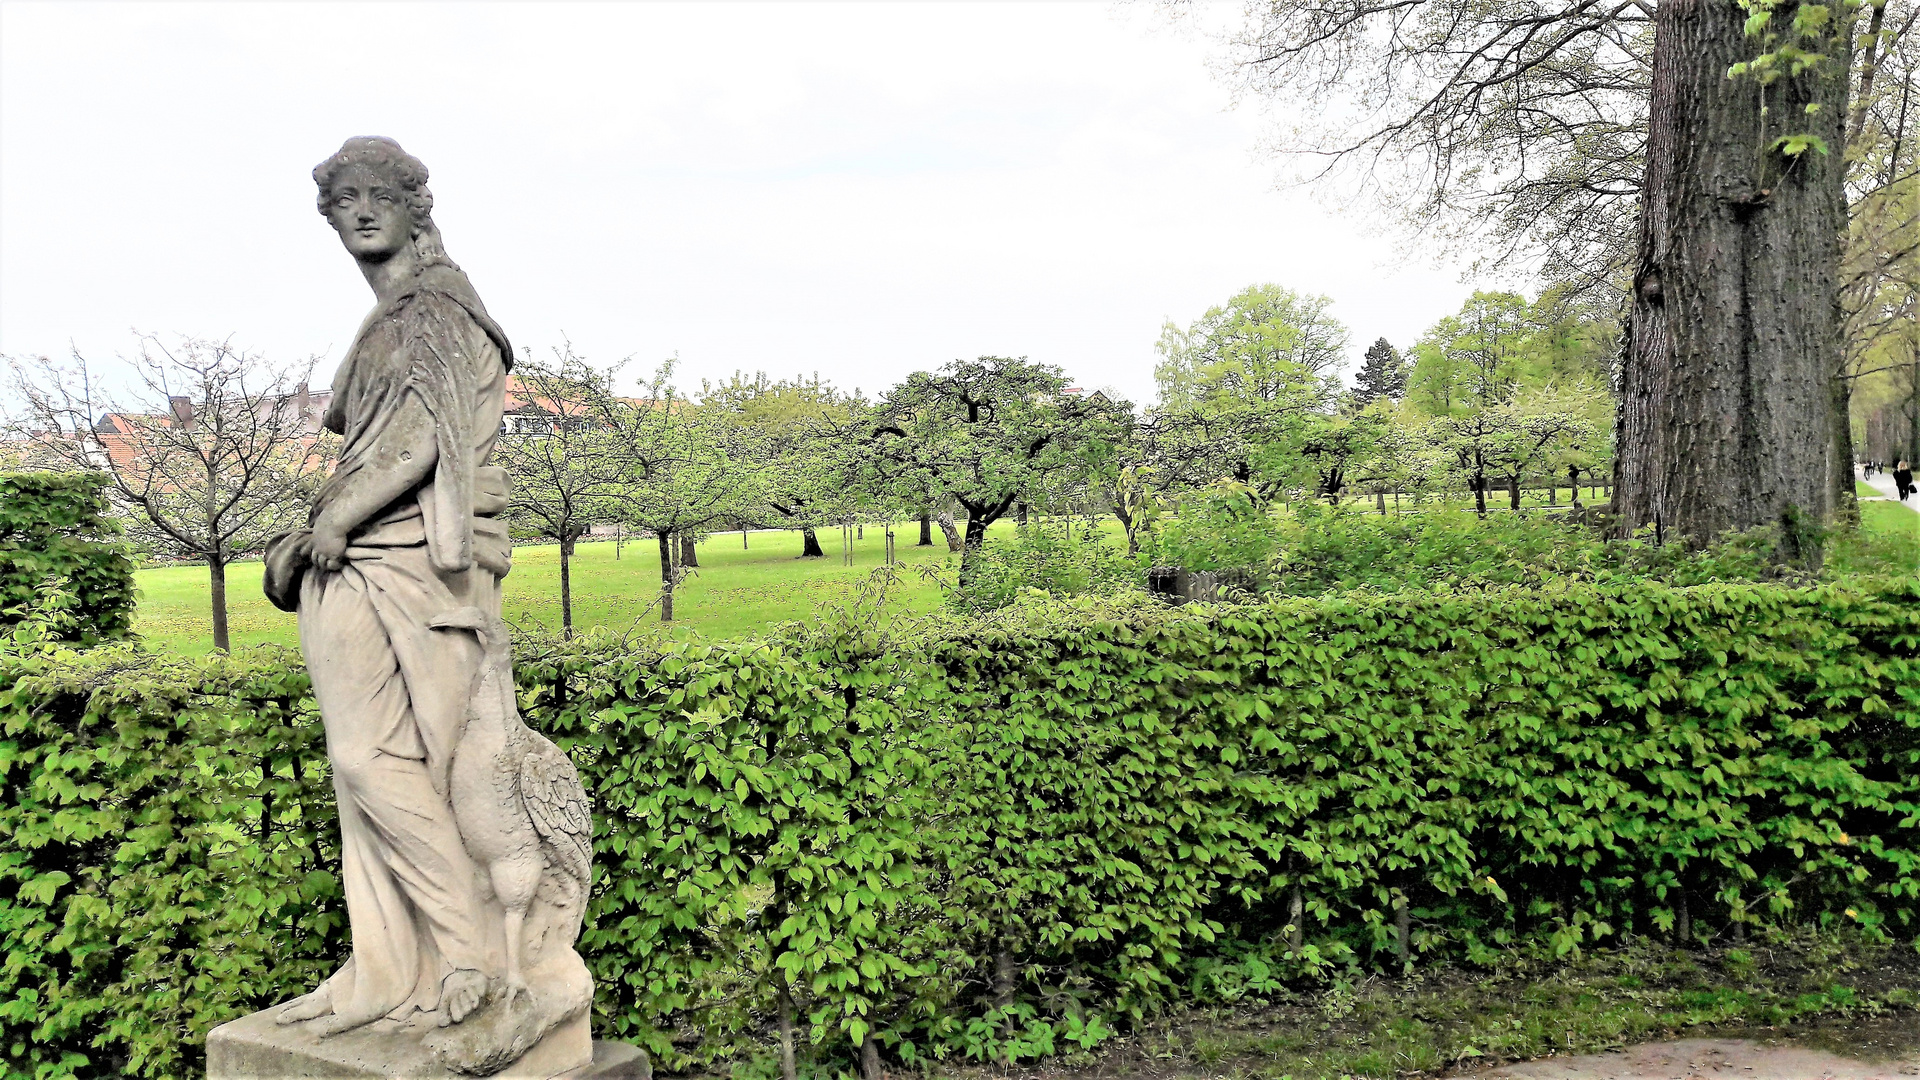 Bayreuth: Hofgarten,Garten der Gärtnerei